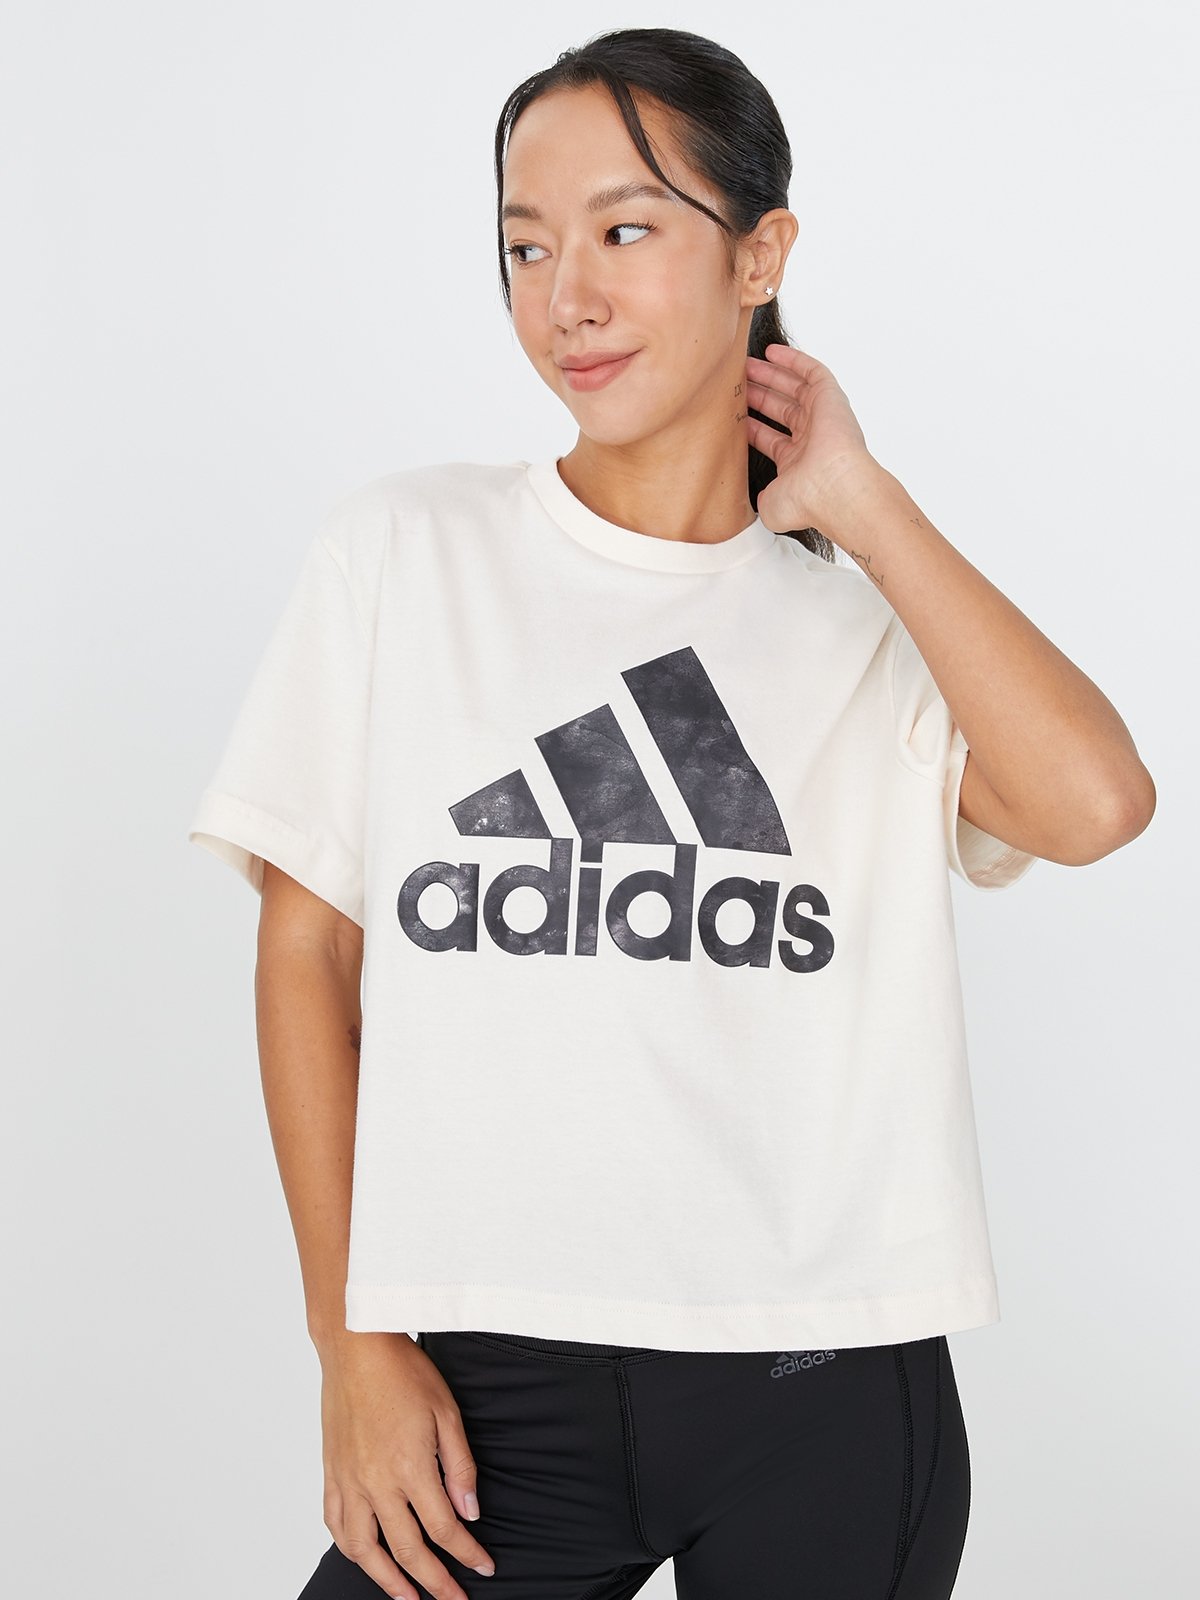 Adidas x Zoe Saldana Graphic T-Shirt - WONWHI - Pomelo Fashion